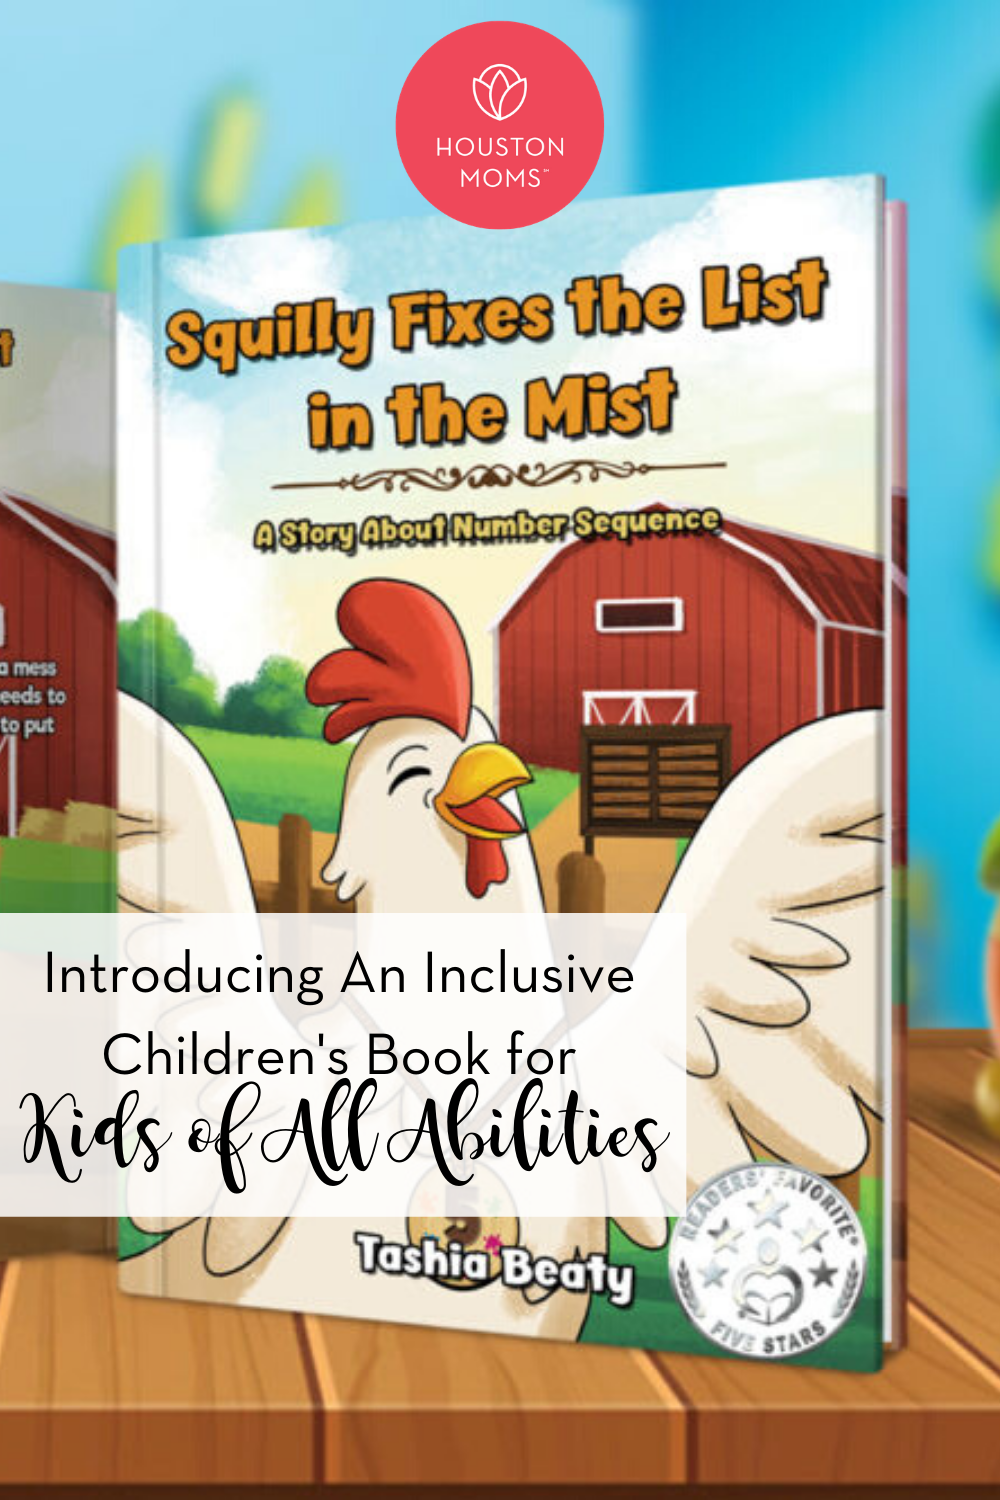 Houston Moms "Introducing an Inclusive Children's Book for Kids of All Abilities" #houstonmoms #houstonmomsblog #momsaroundhouston